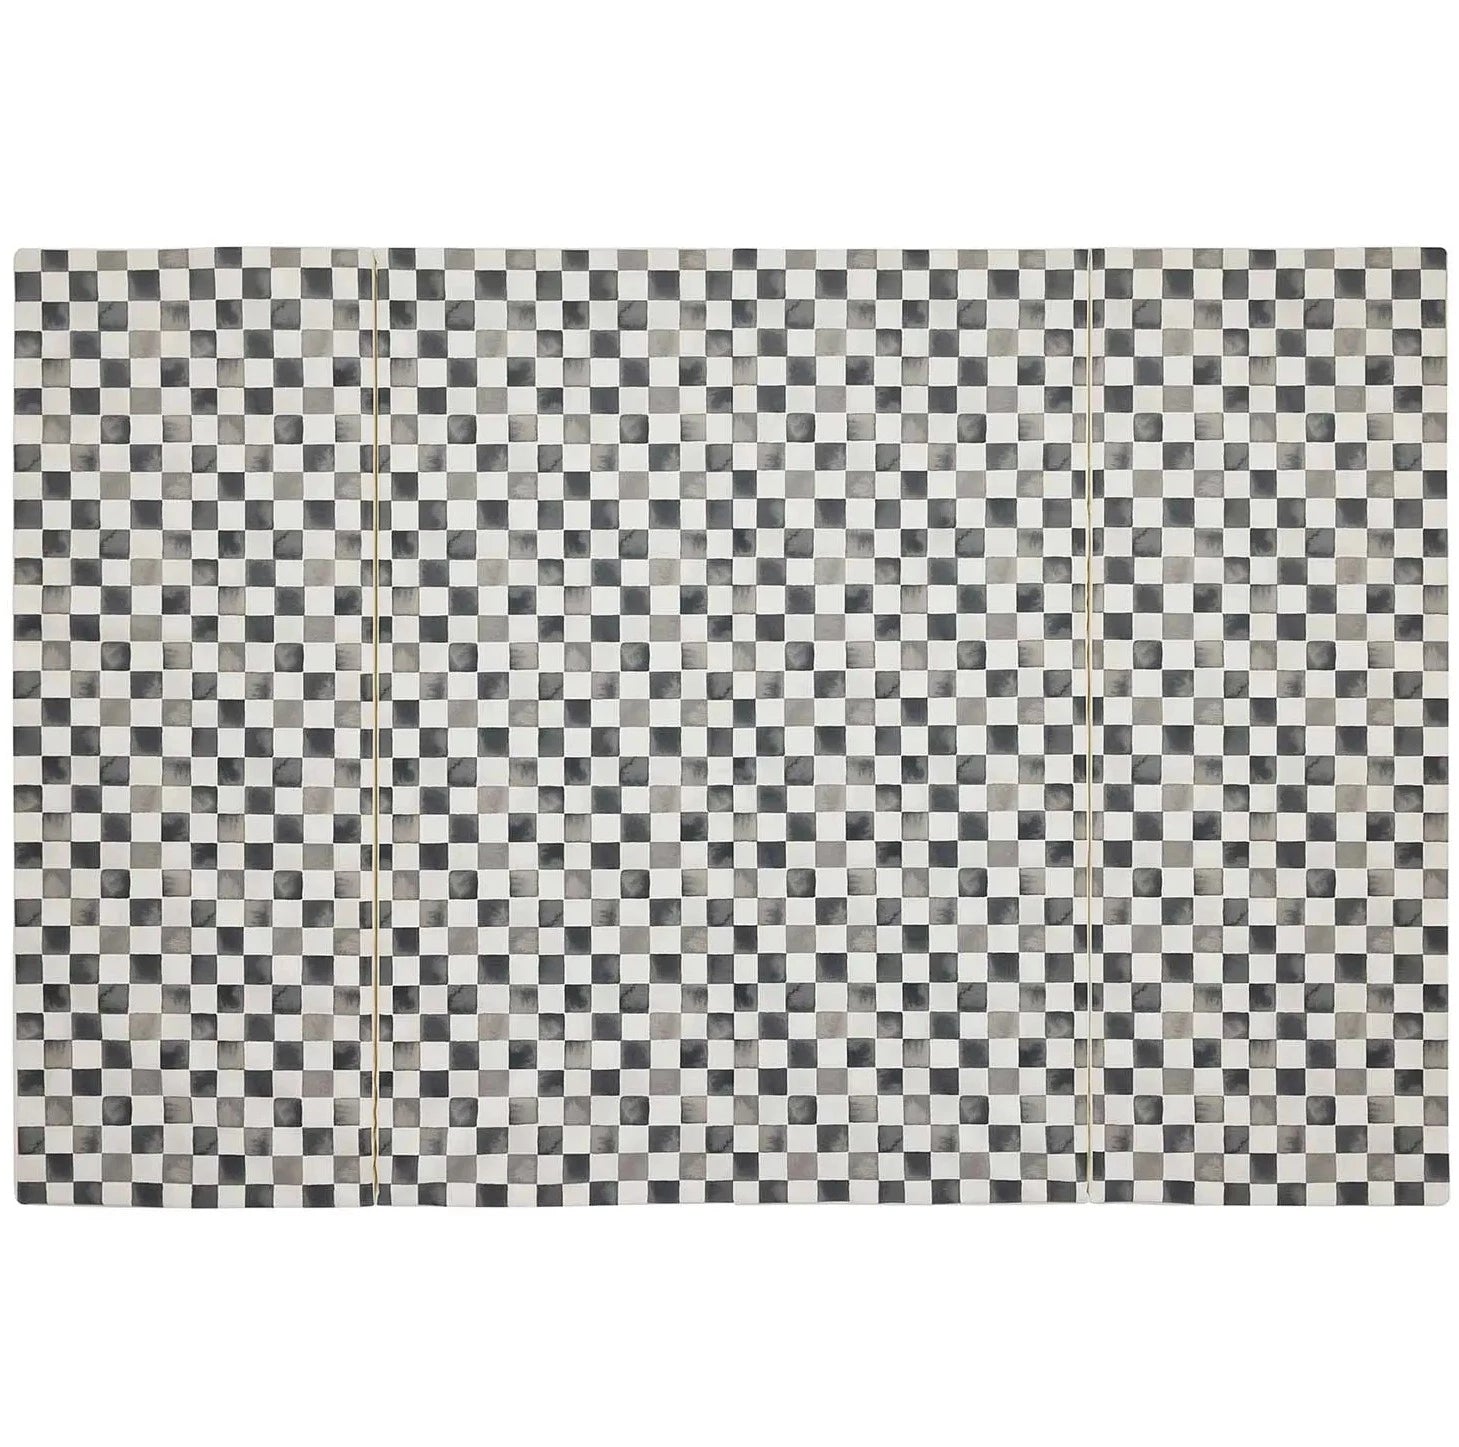 Tuxedo black and white checker print tumbling mat 